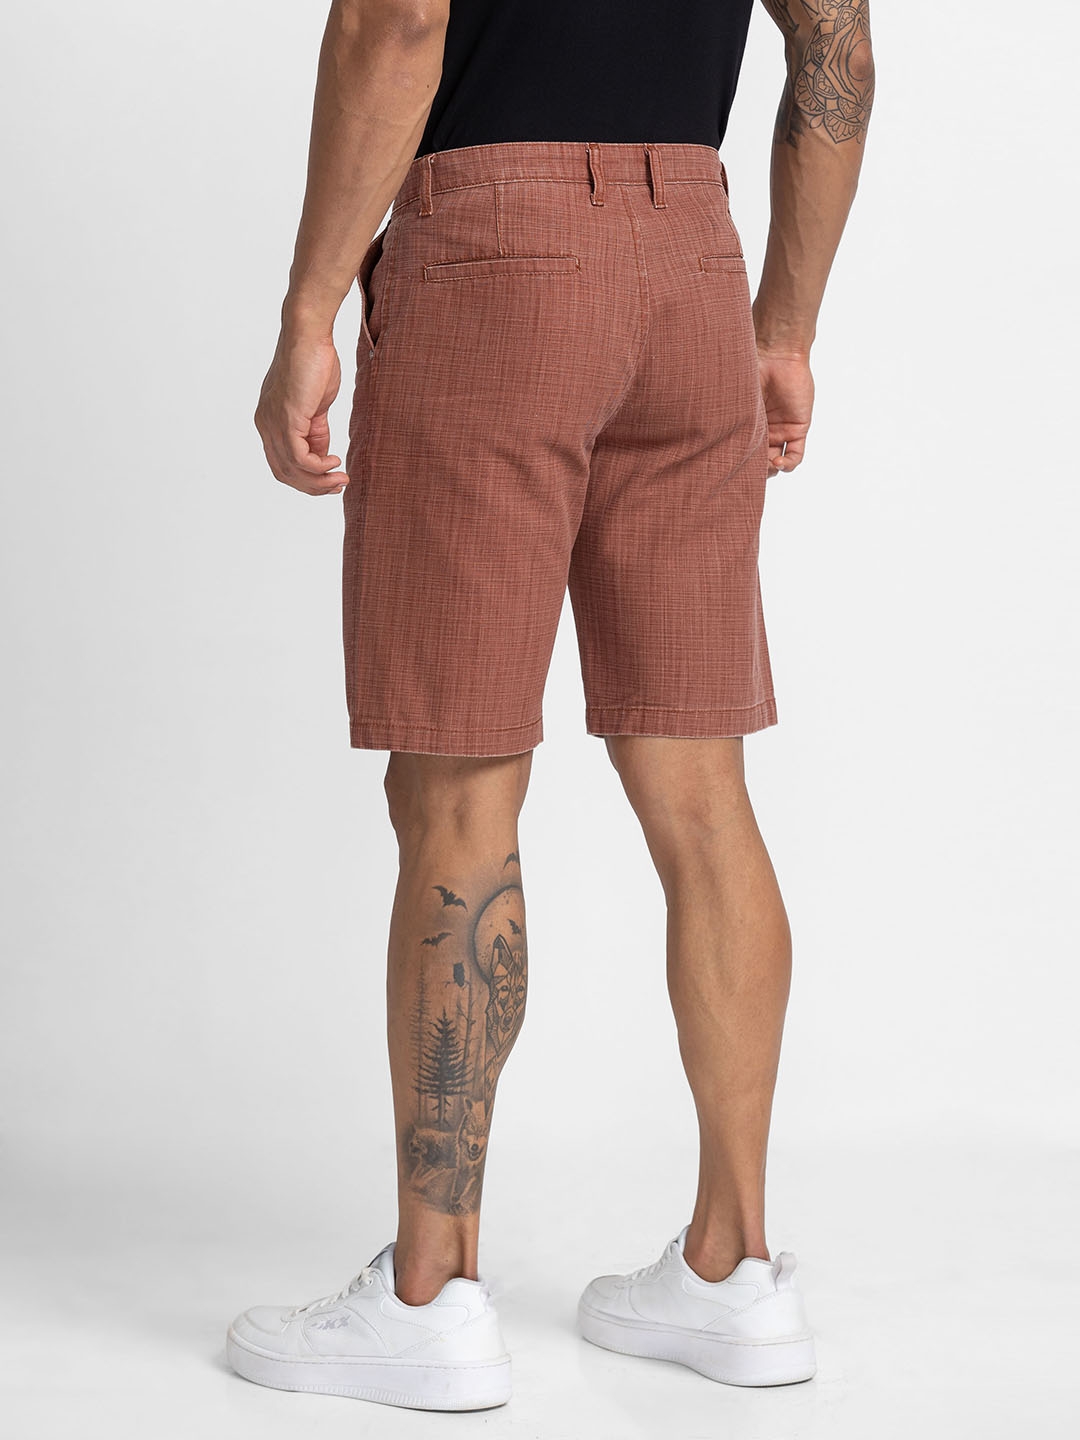 globus | Men's Brown Cotton Solid Shorts 2